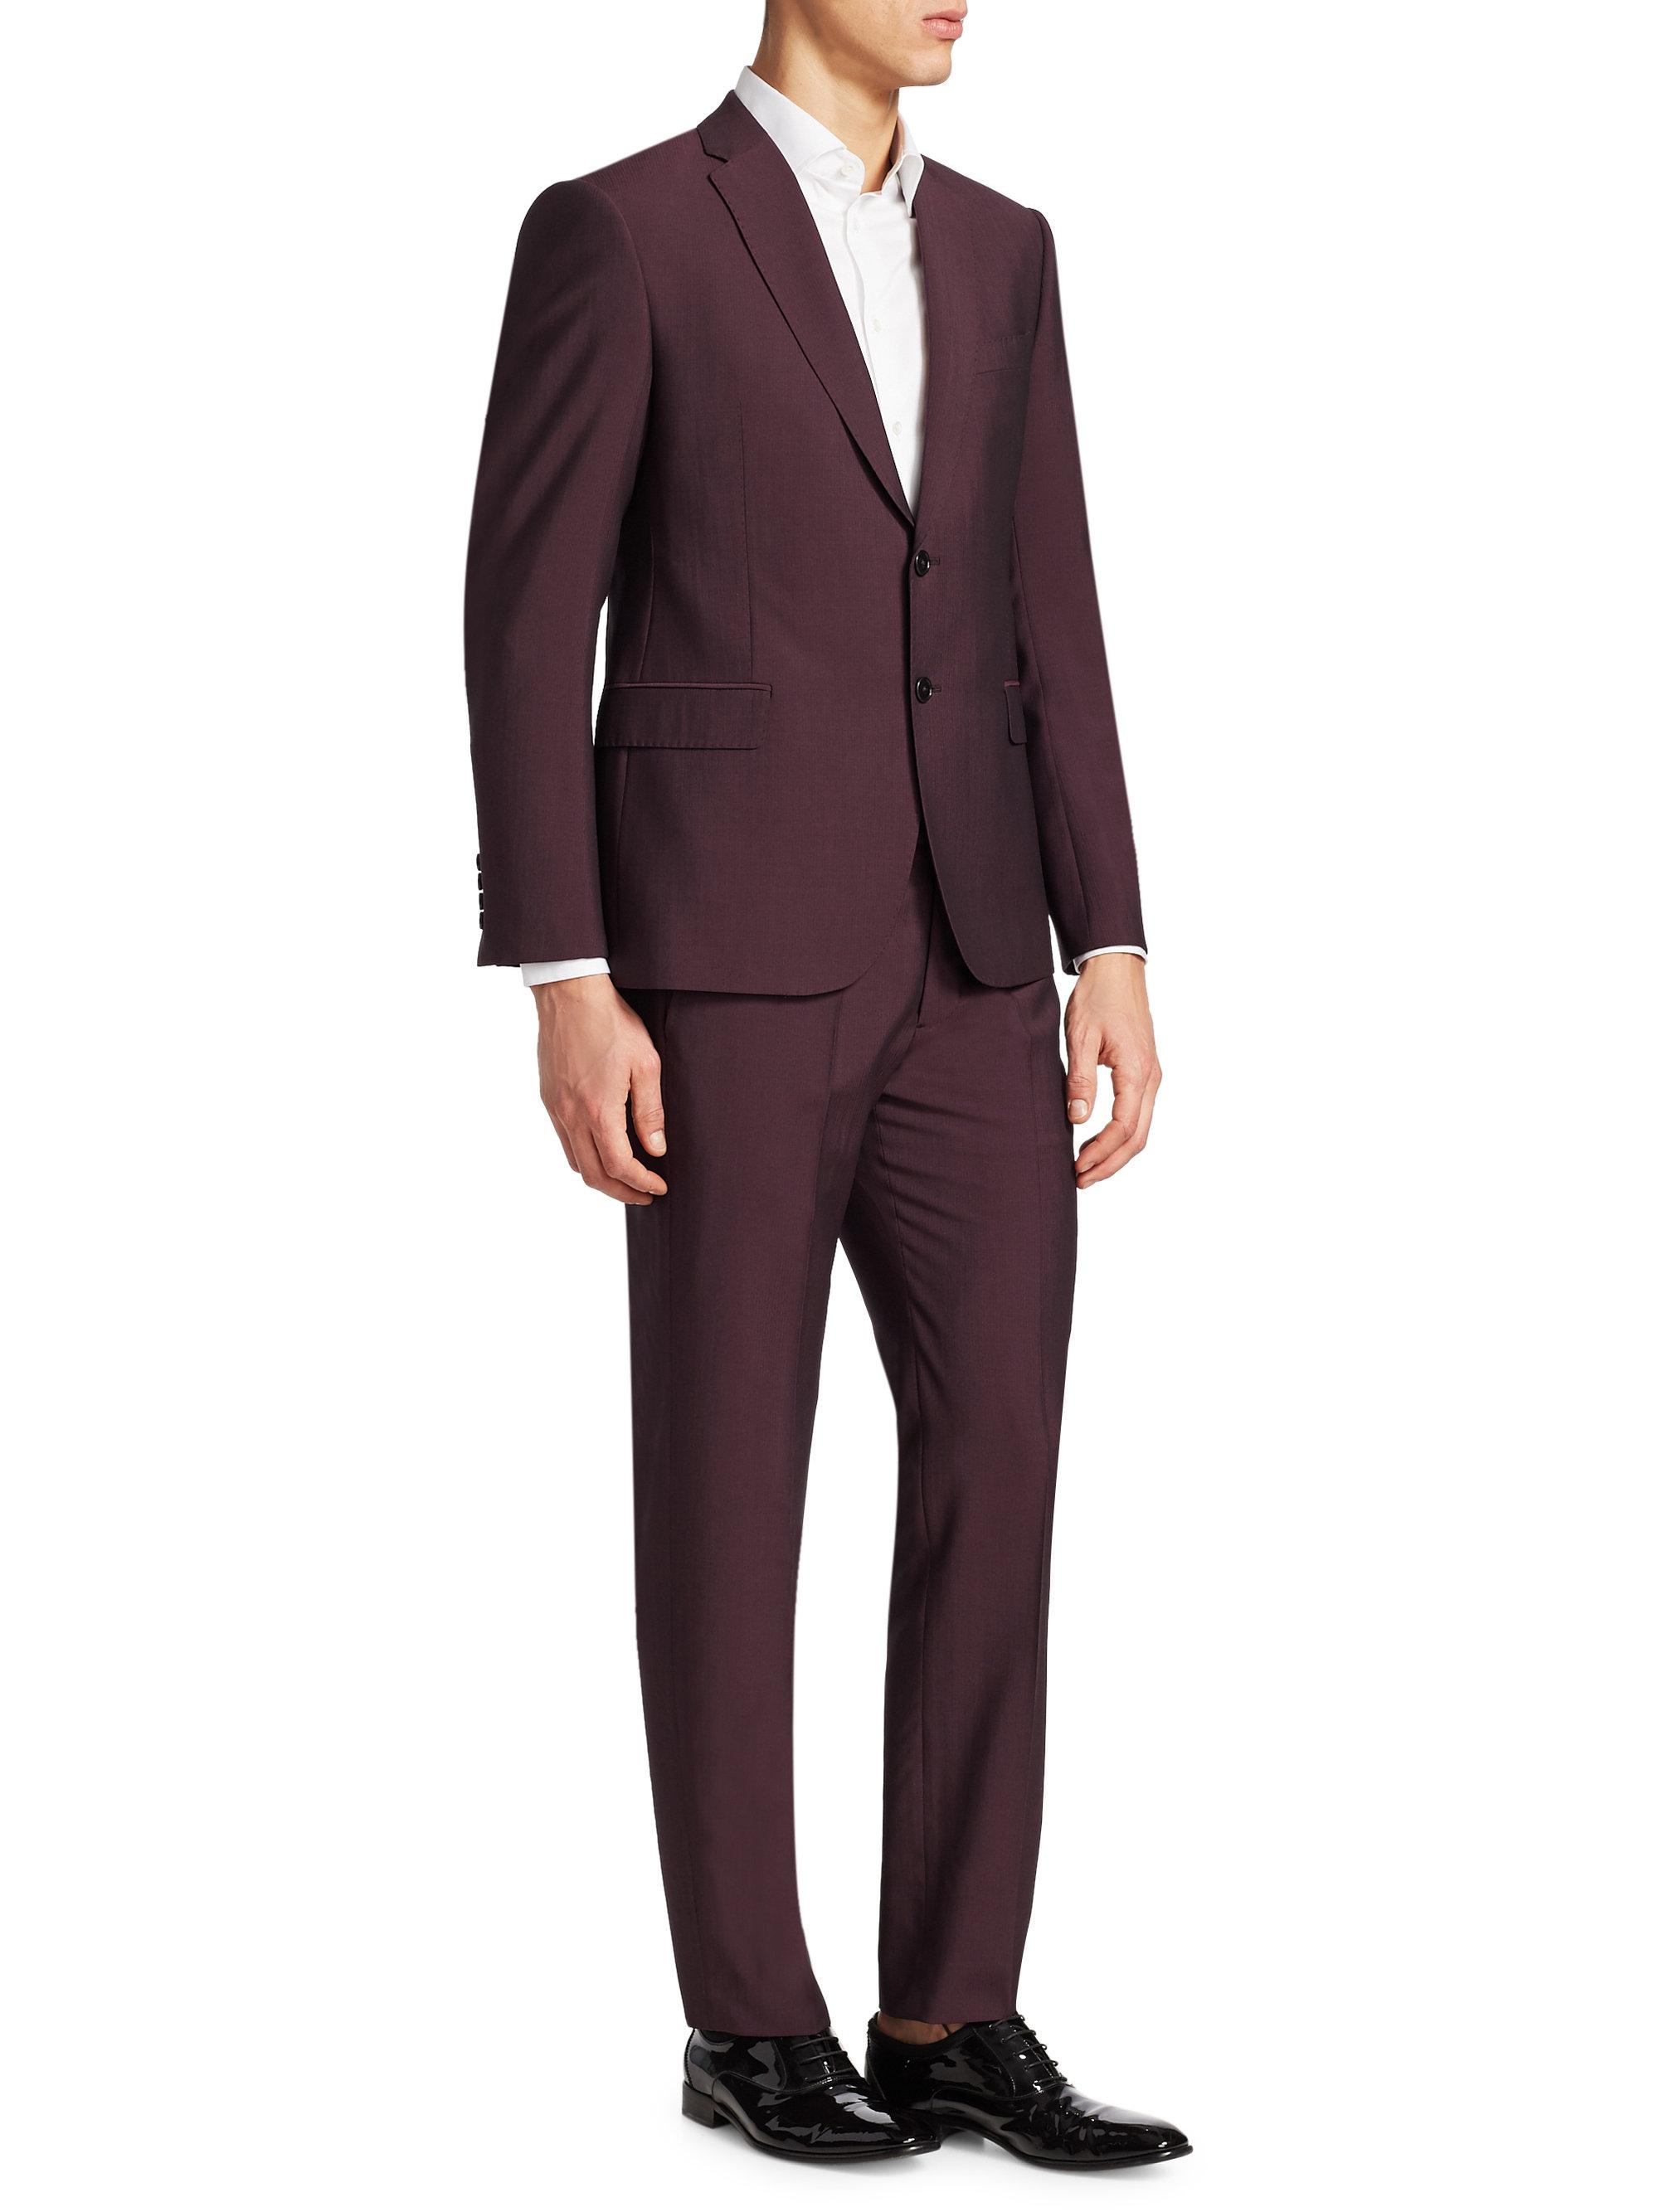 armani burgundy suit - 57% OFF 